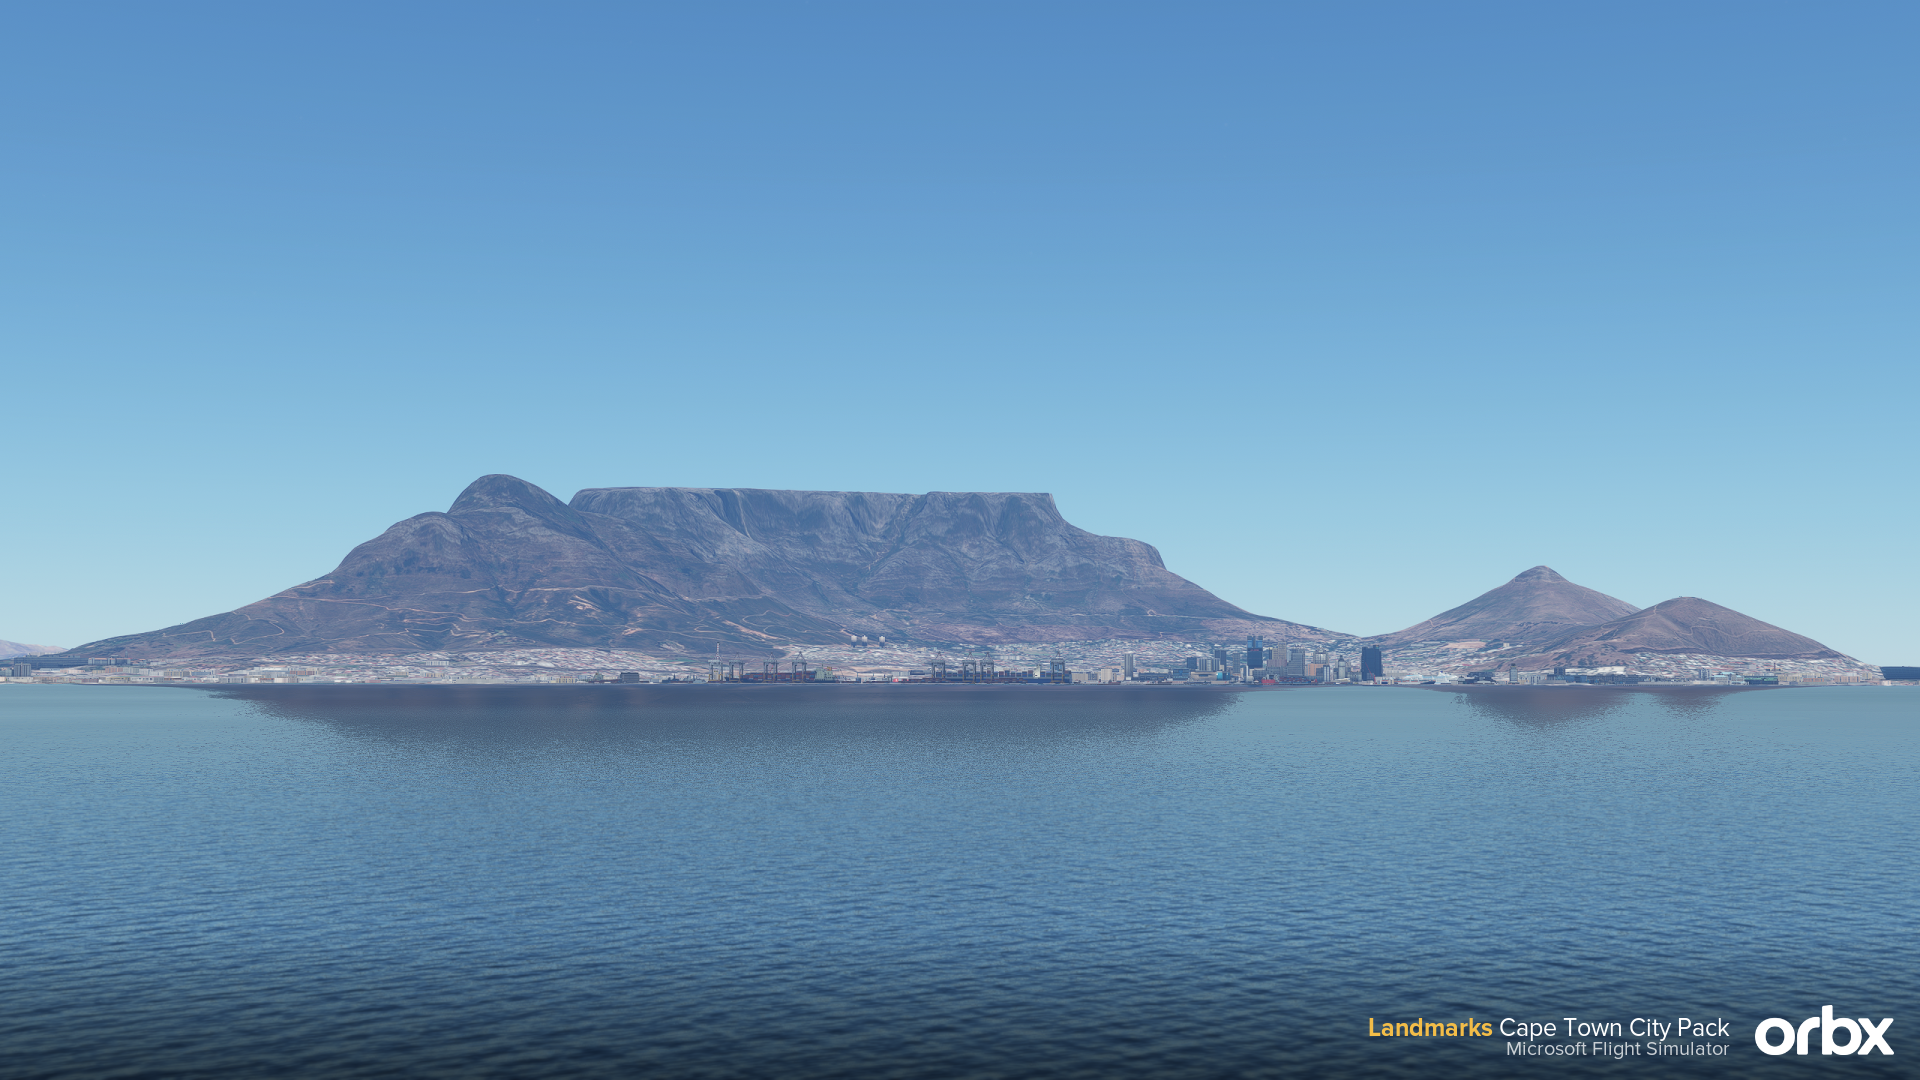 Orbx Announces Cape Town Landmarks for MSFS - Microsoft Flight Simulator, Orbx